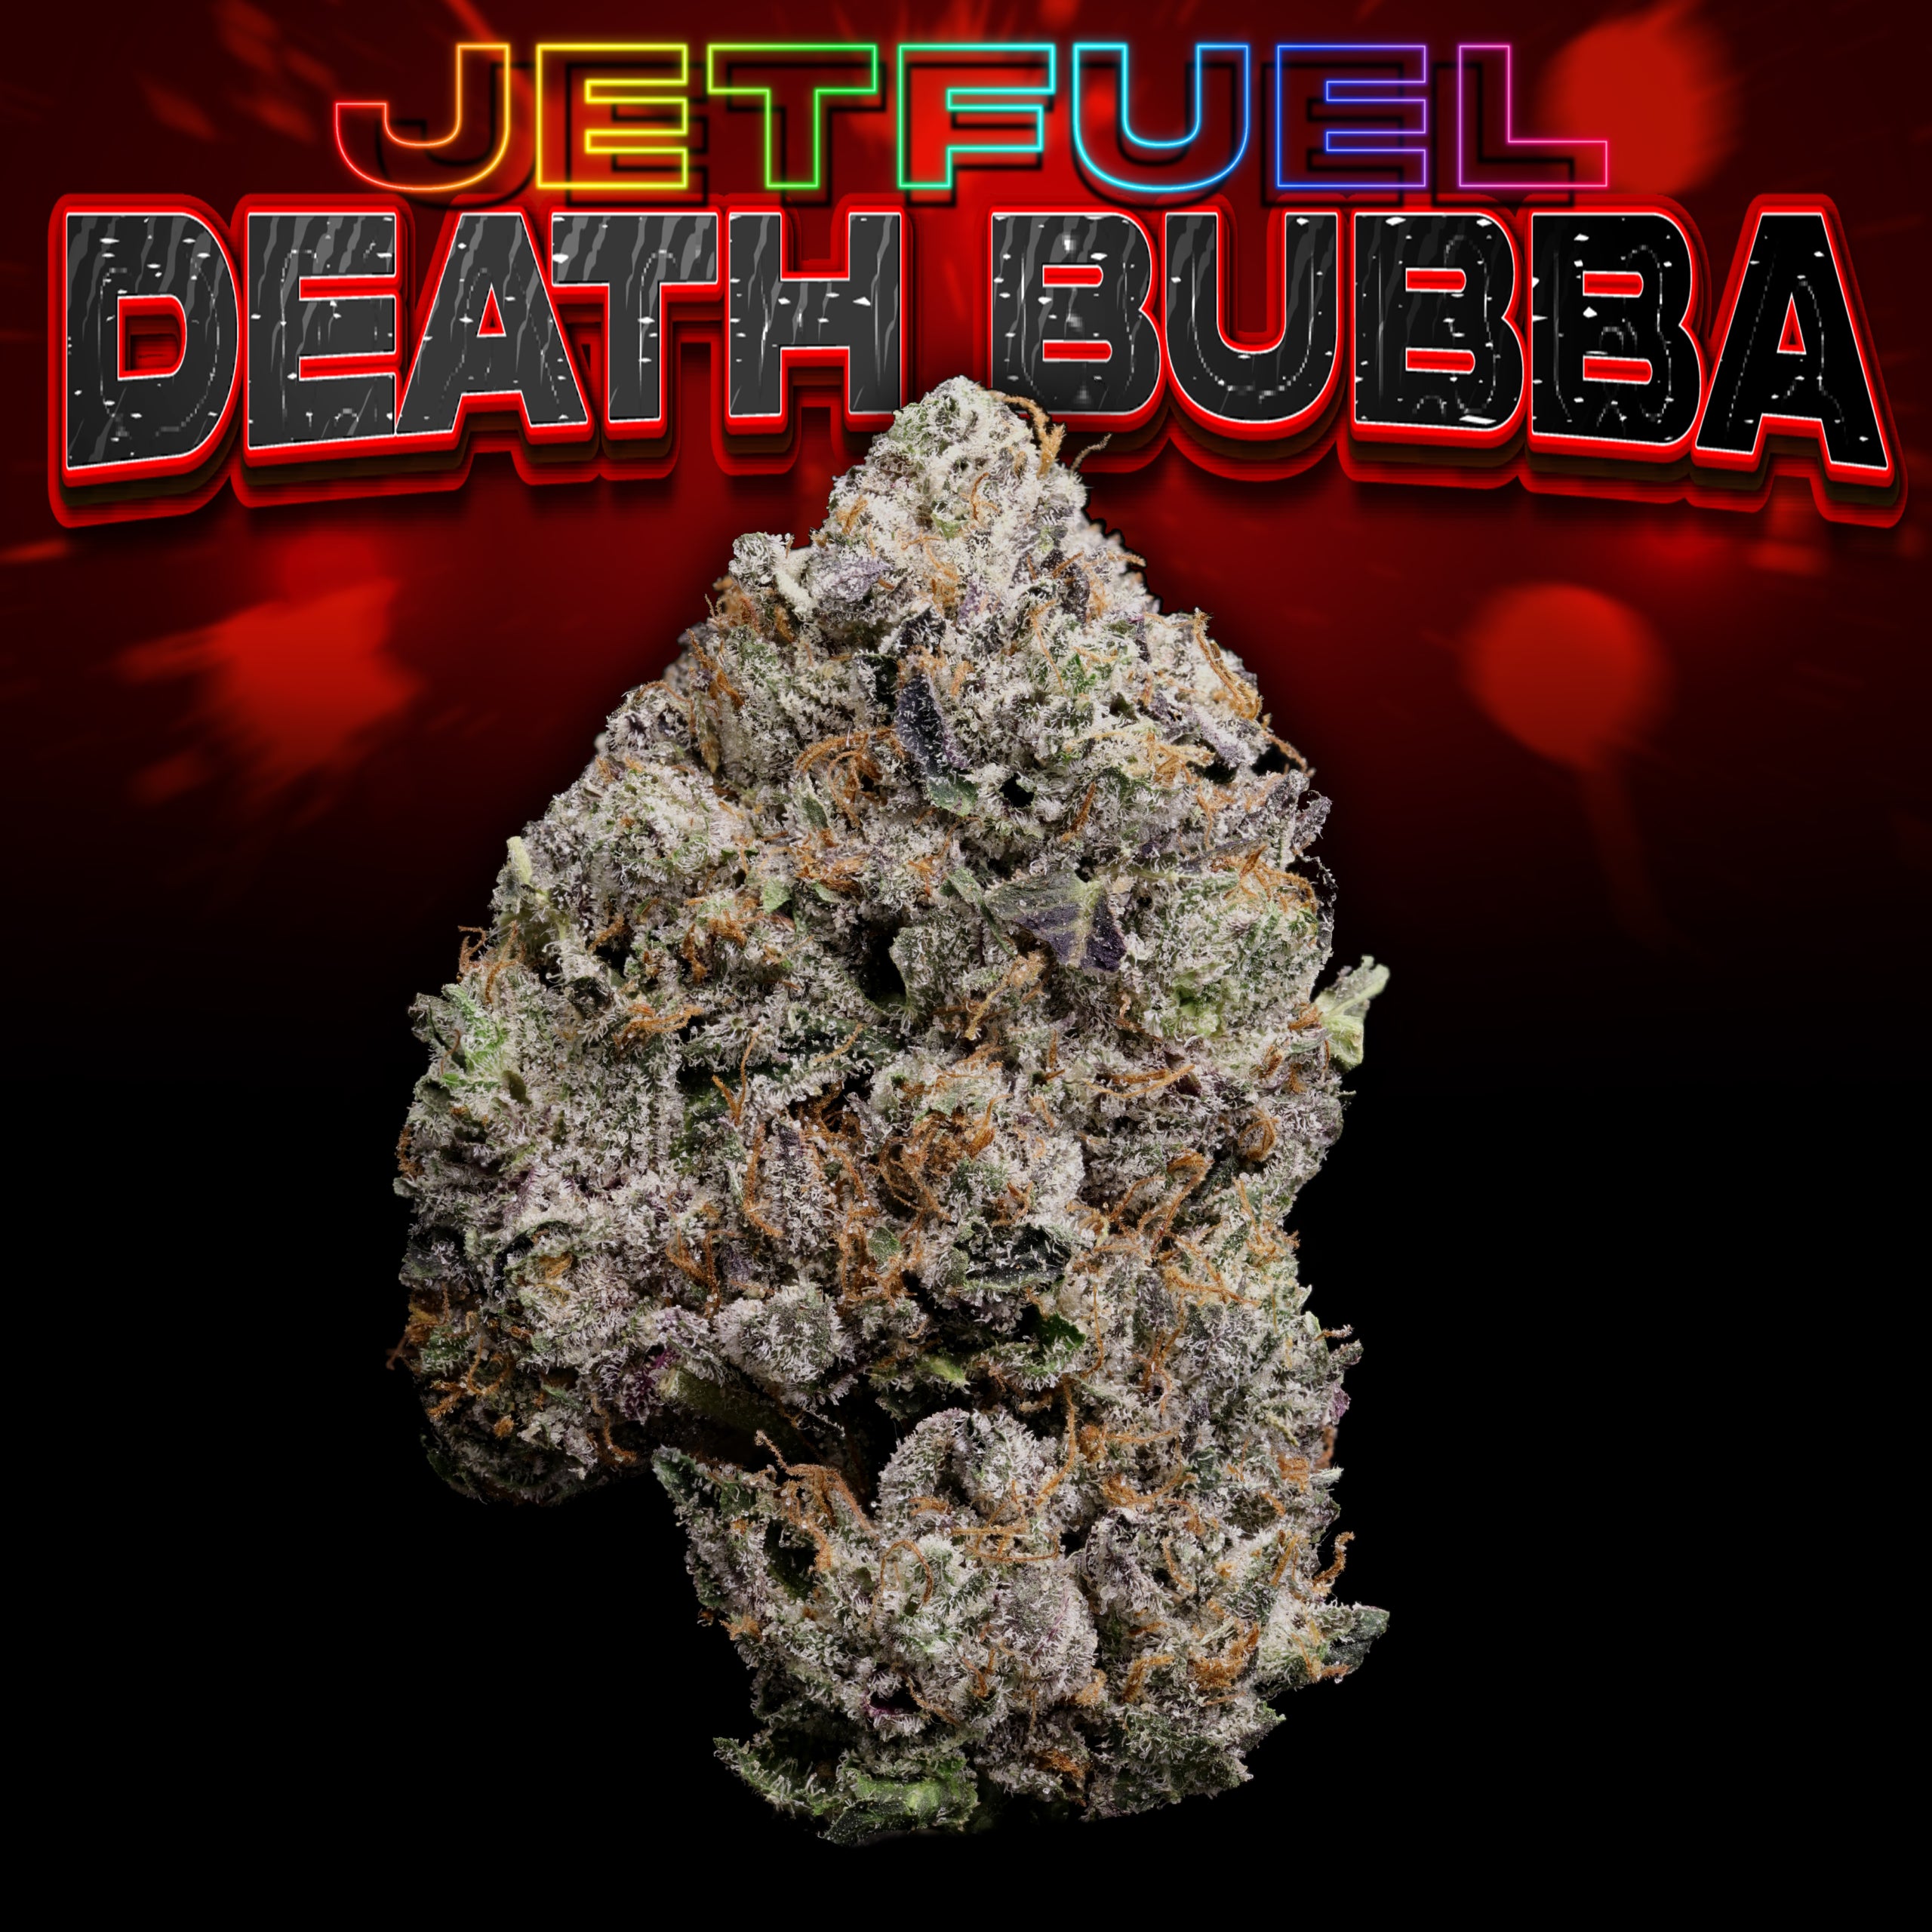 Jetfuel Death Bubba